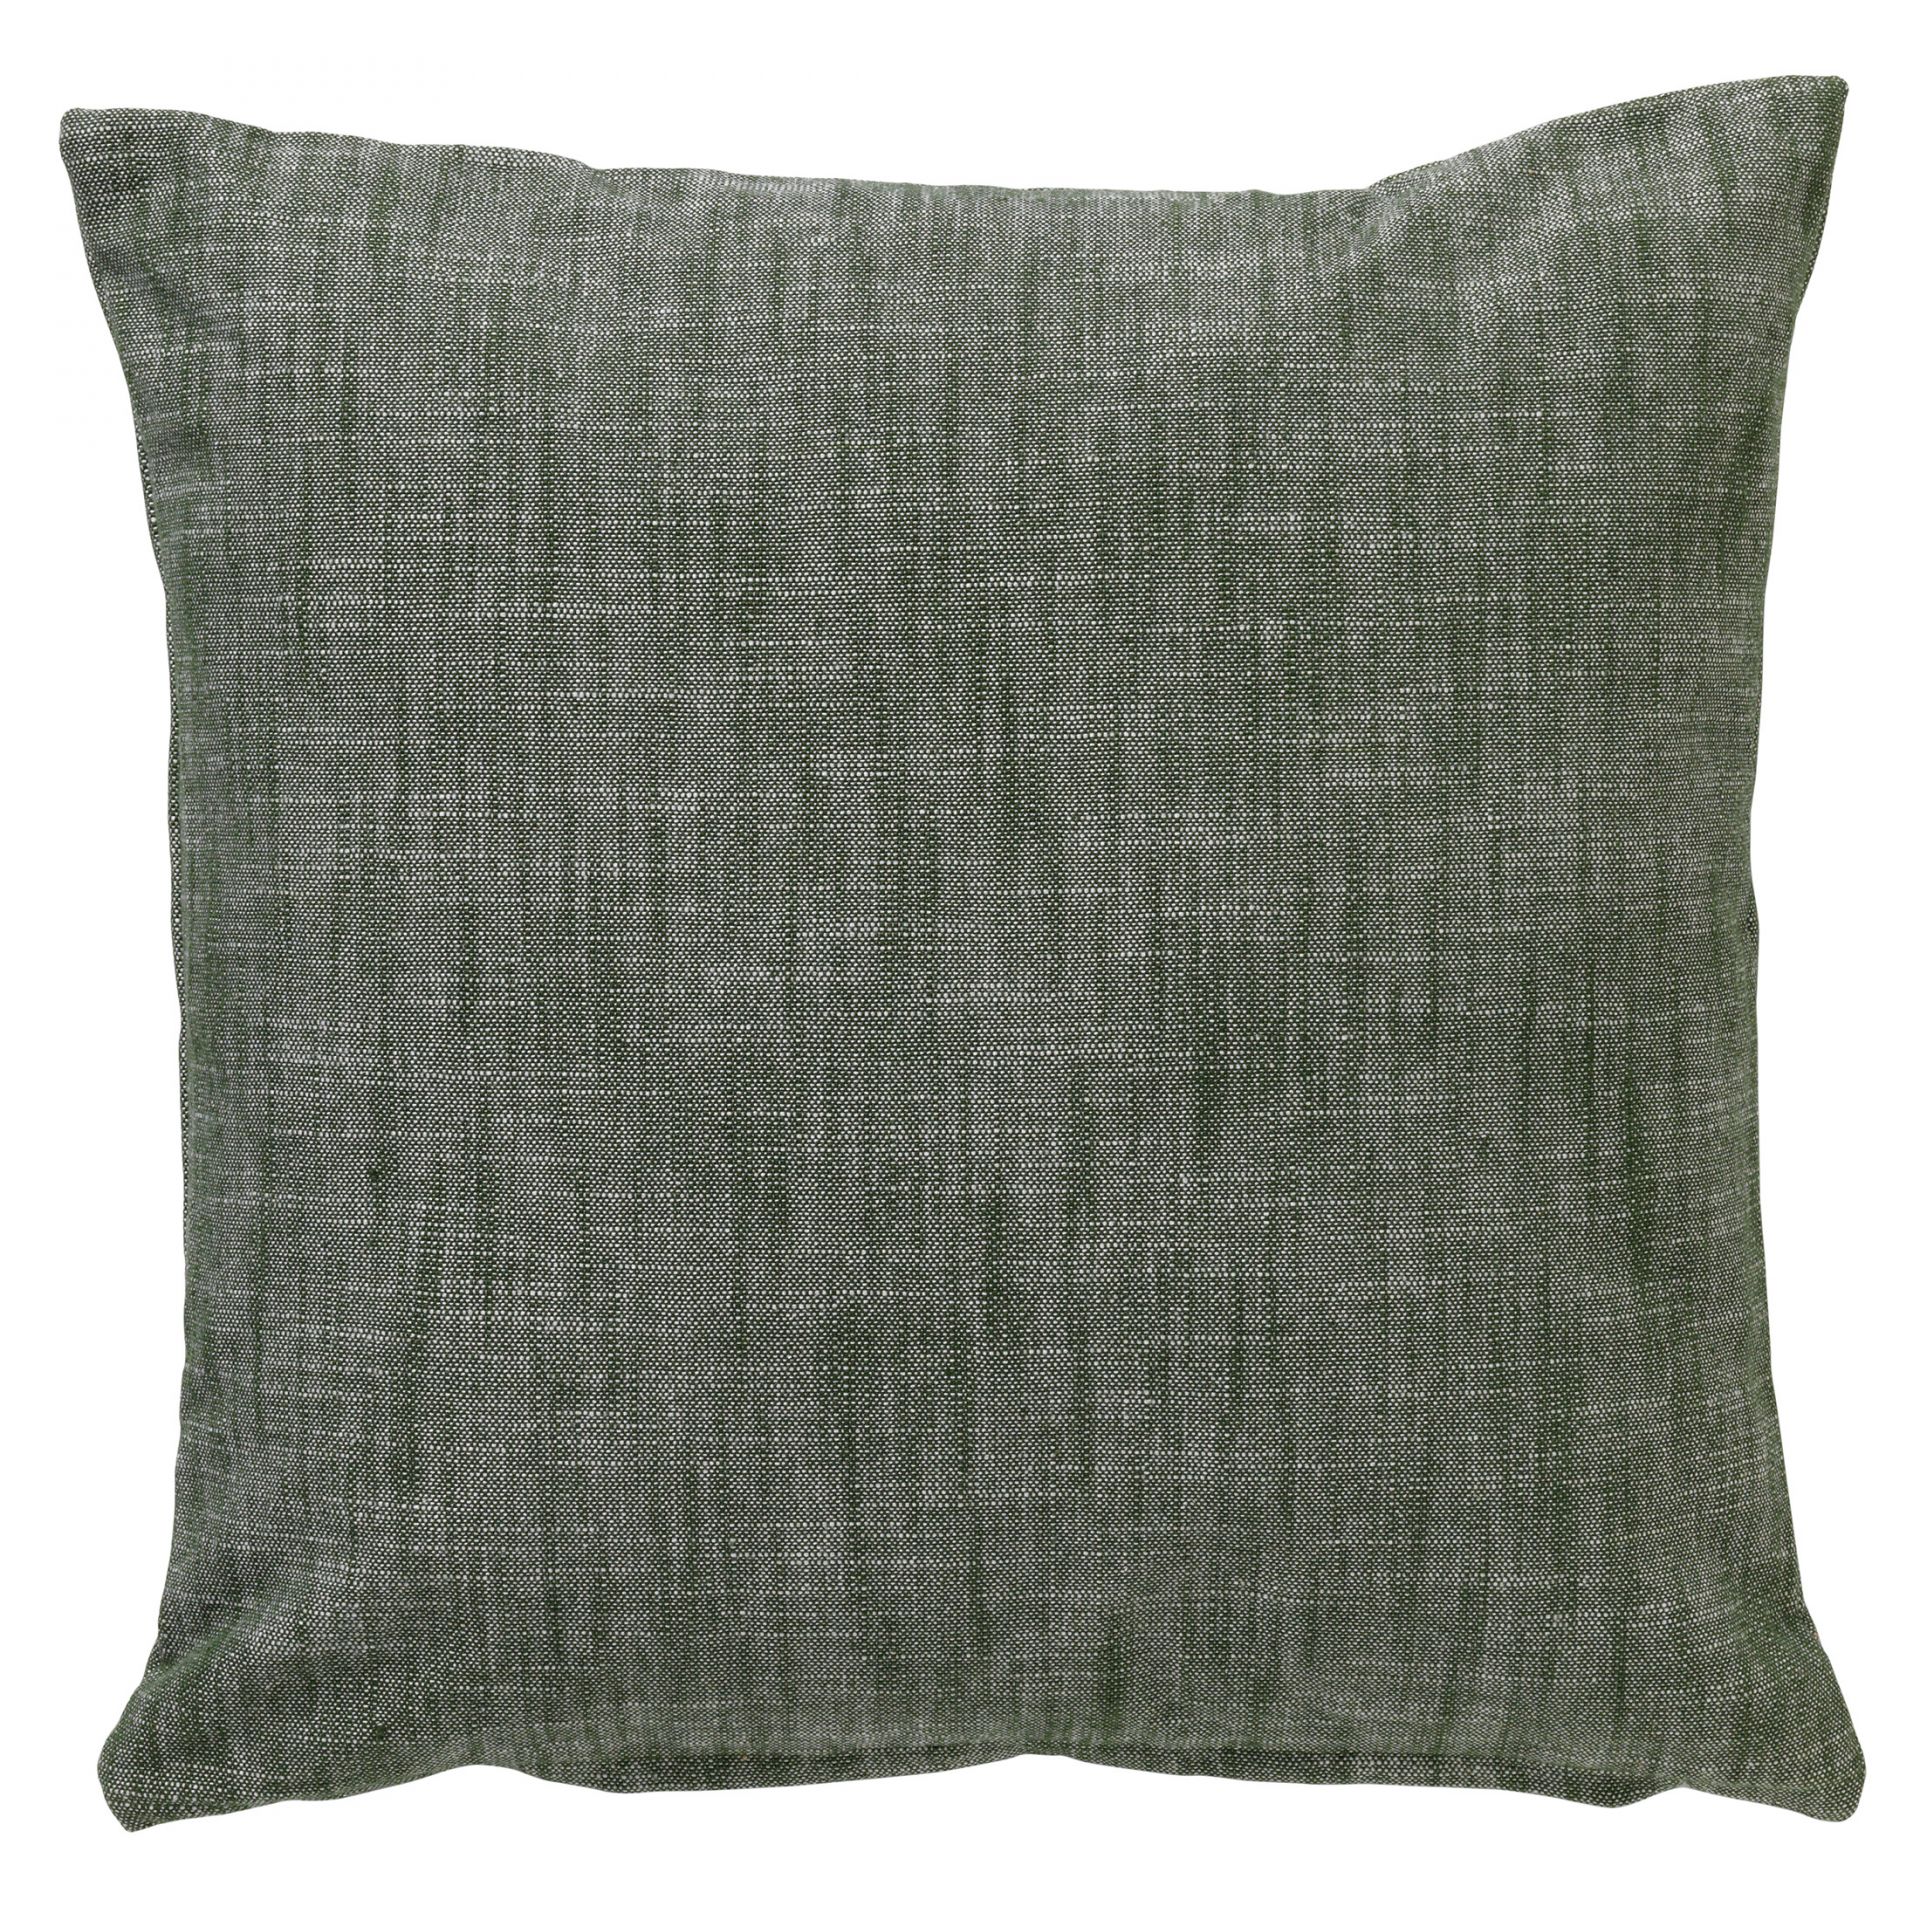 NATURA - Cushion 100% cotton 45x45 cm Chive - green